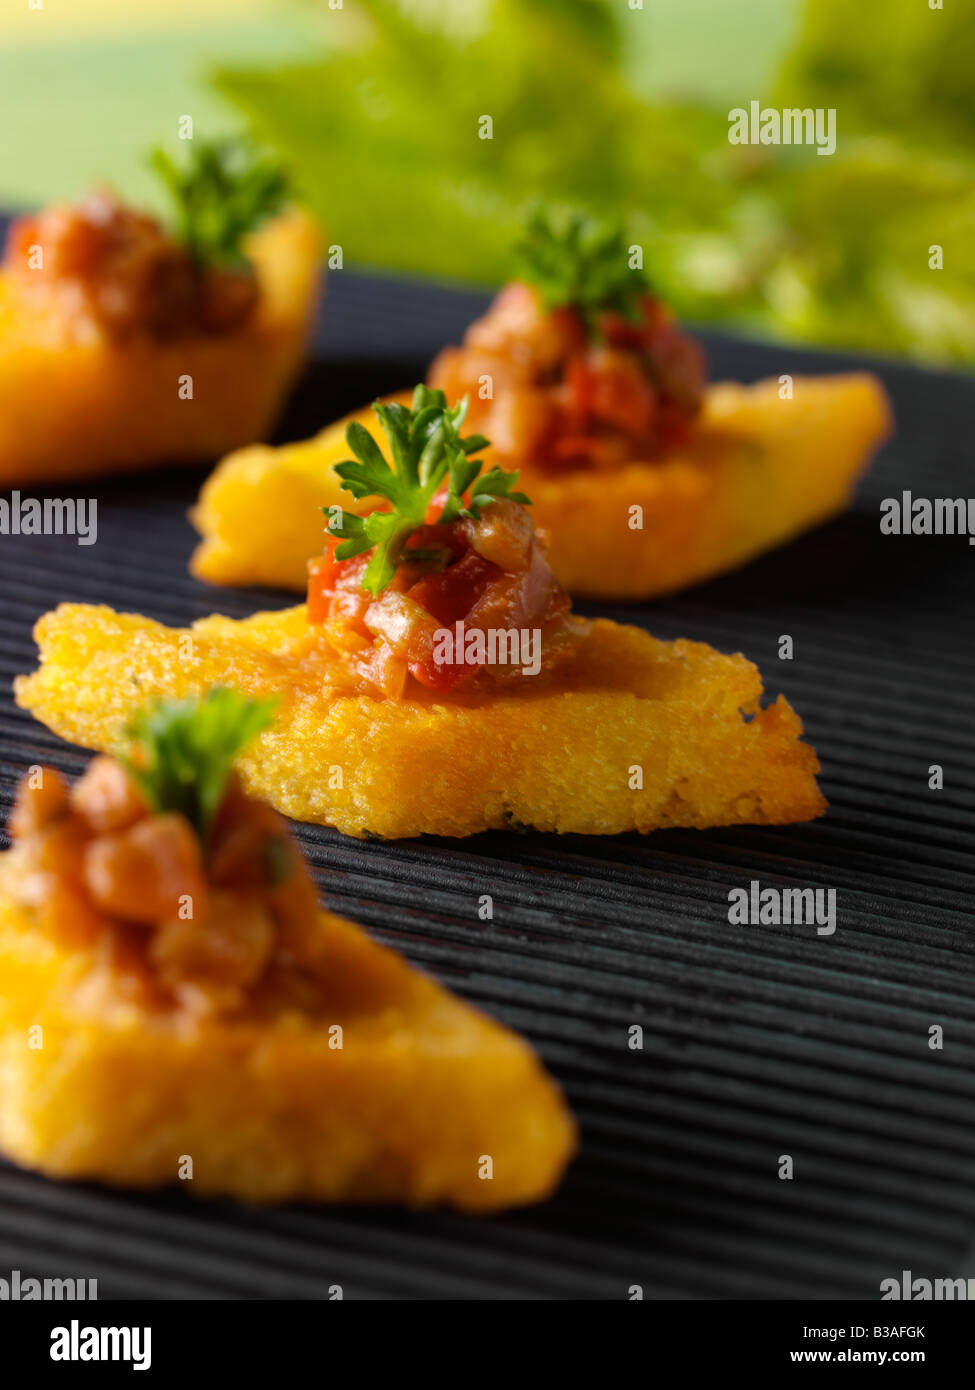 Polenta ratatouille Canapés gourmet food editorial Fotografía de stock -  Alamy